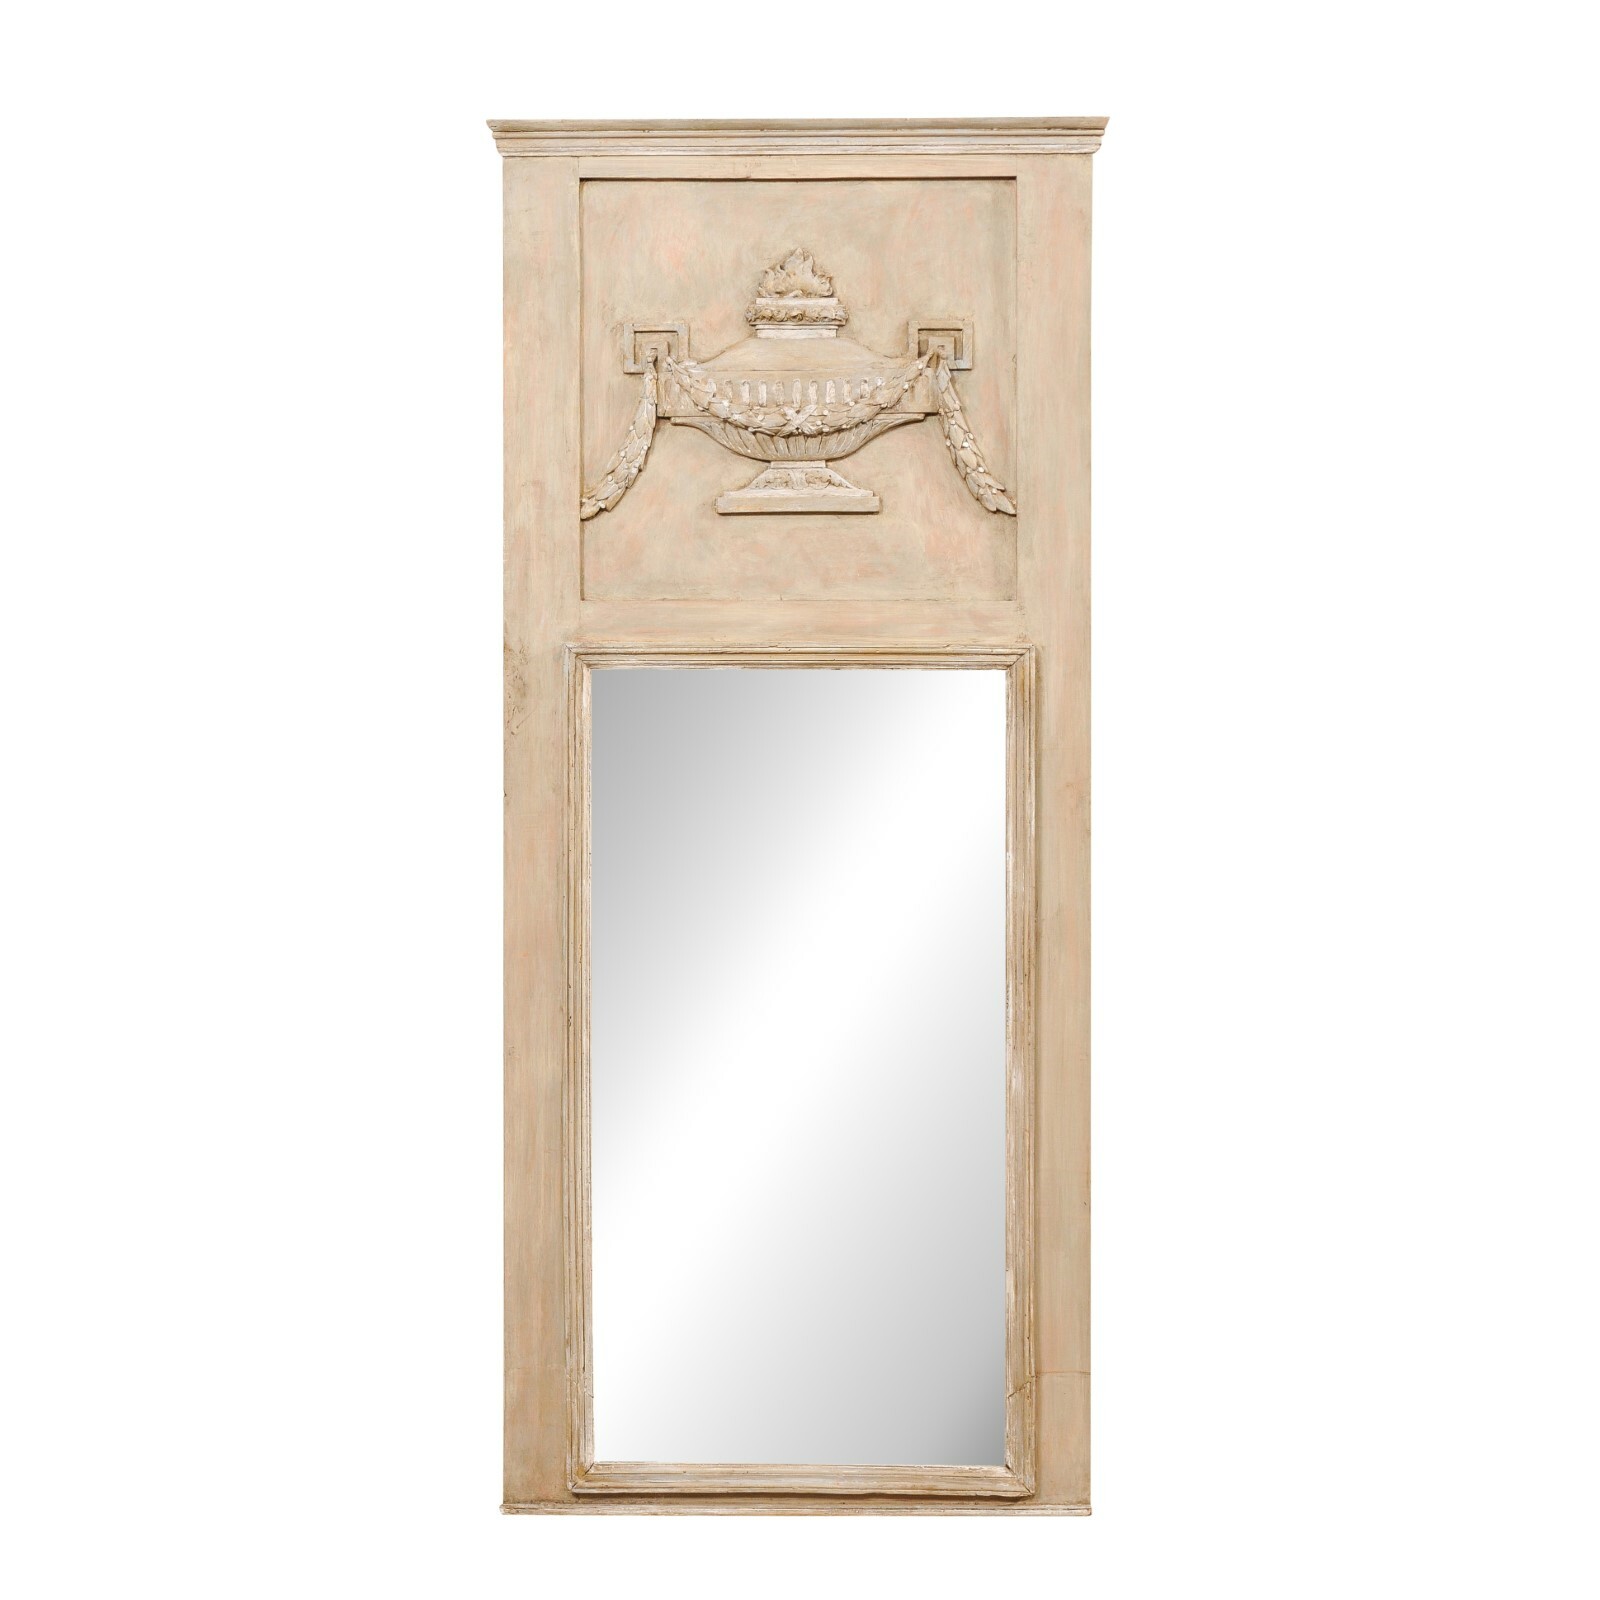 French Neoclassic Trumeau Mirror, 19th C.